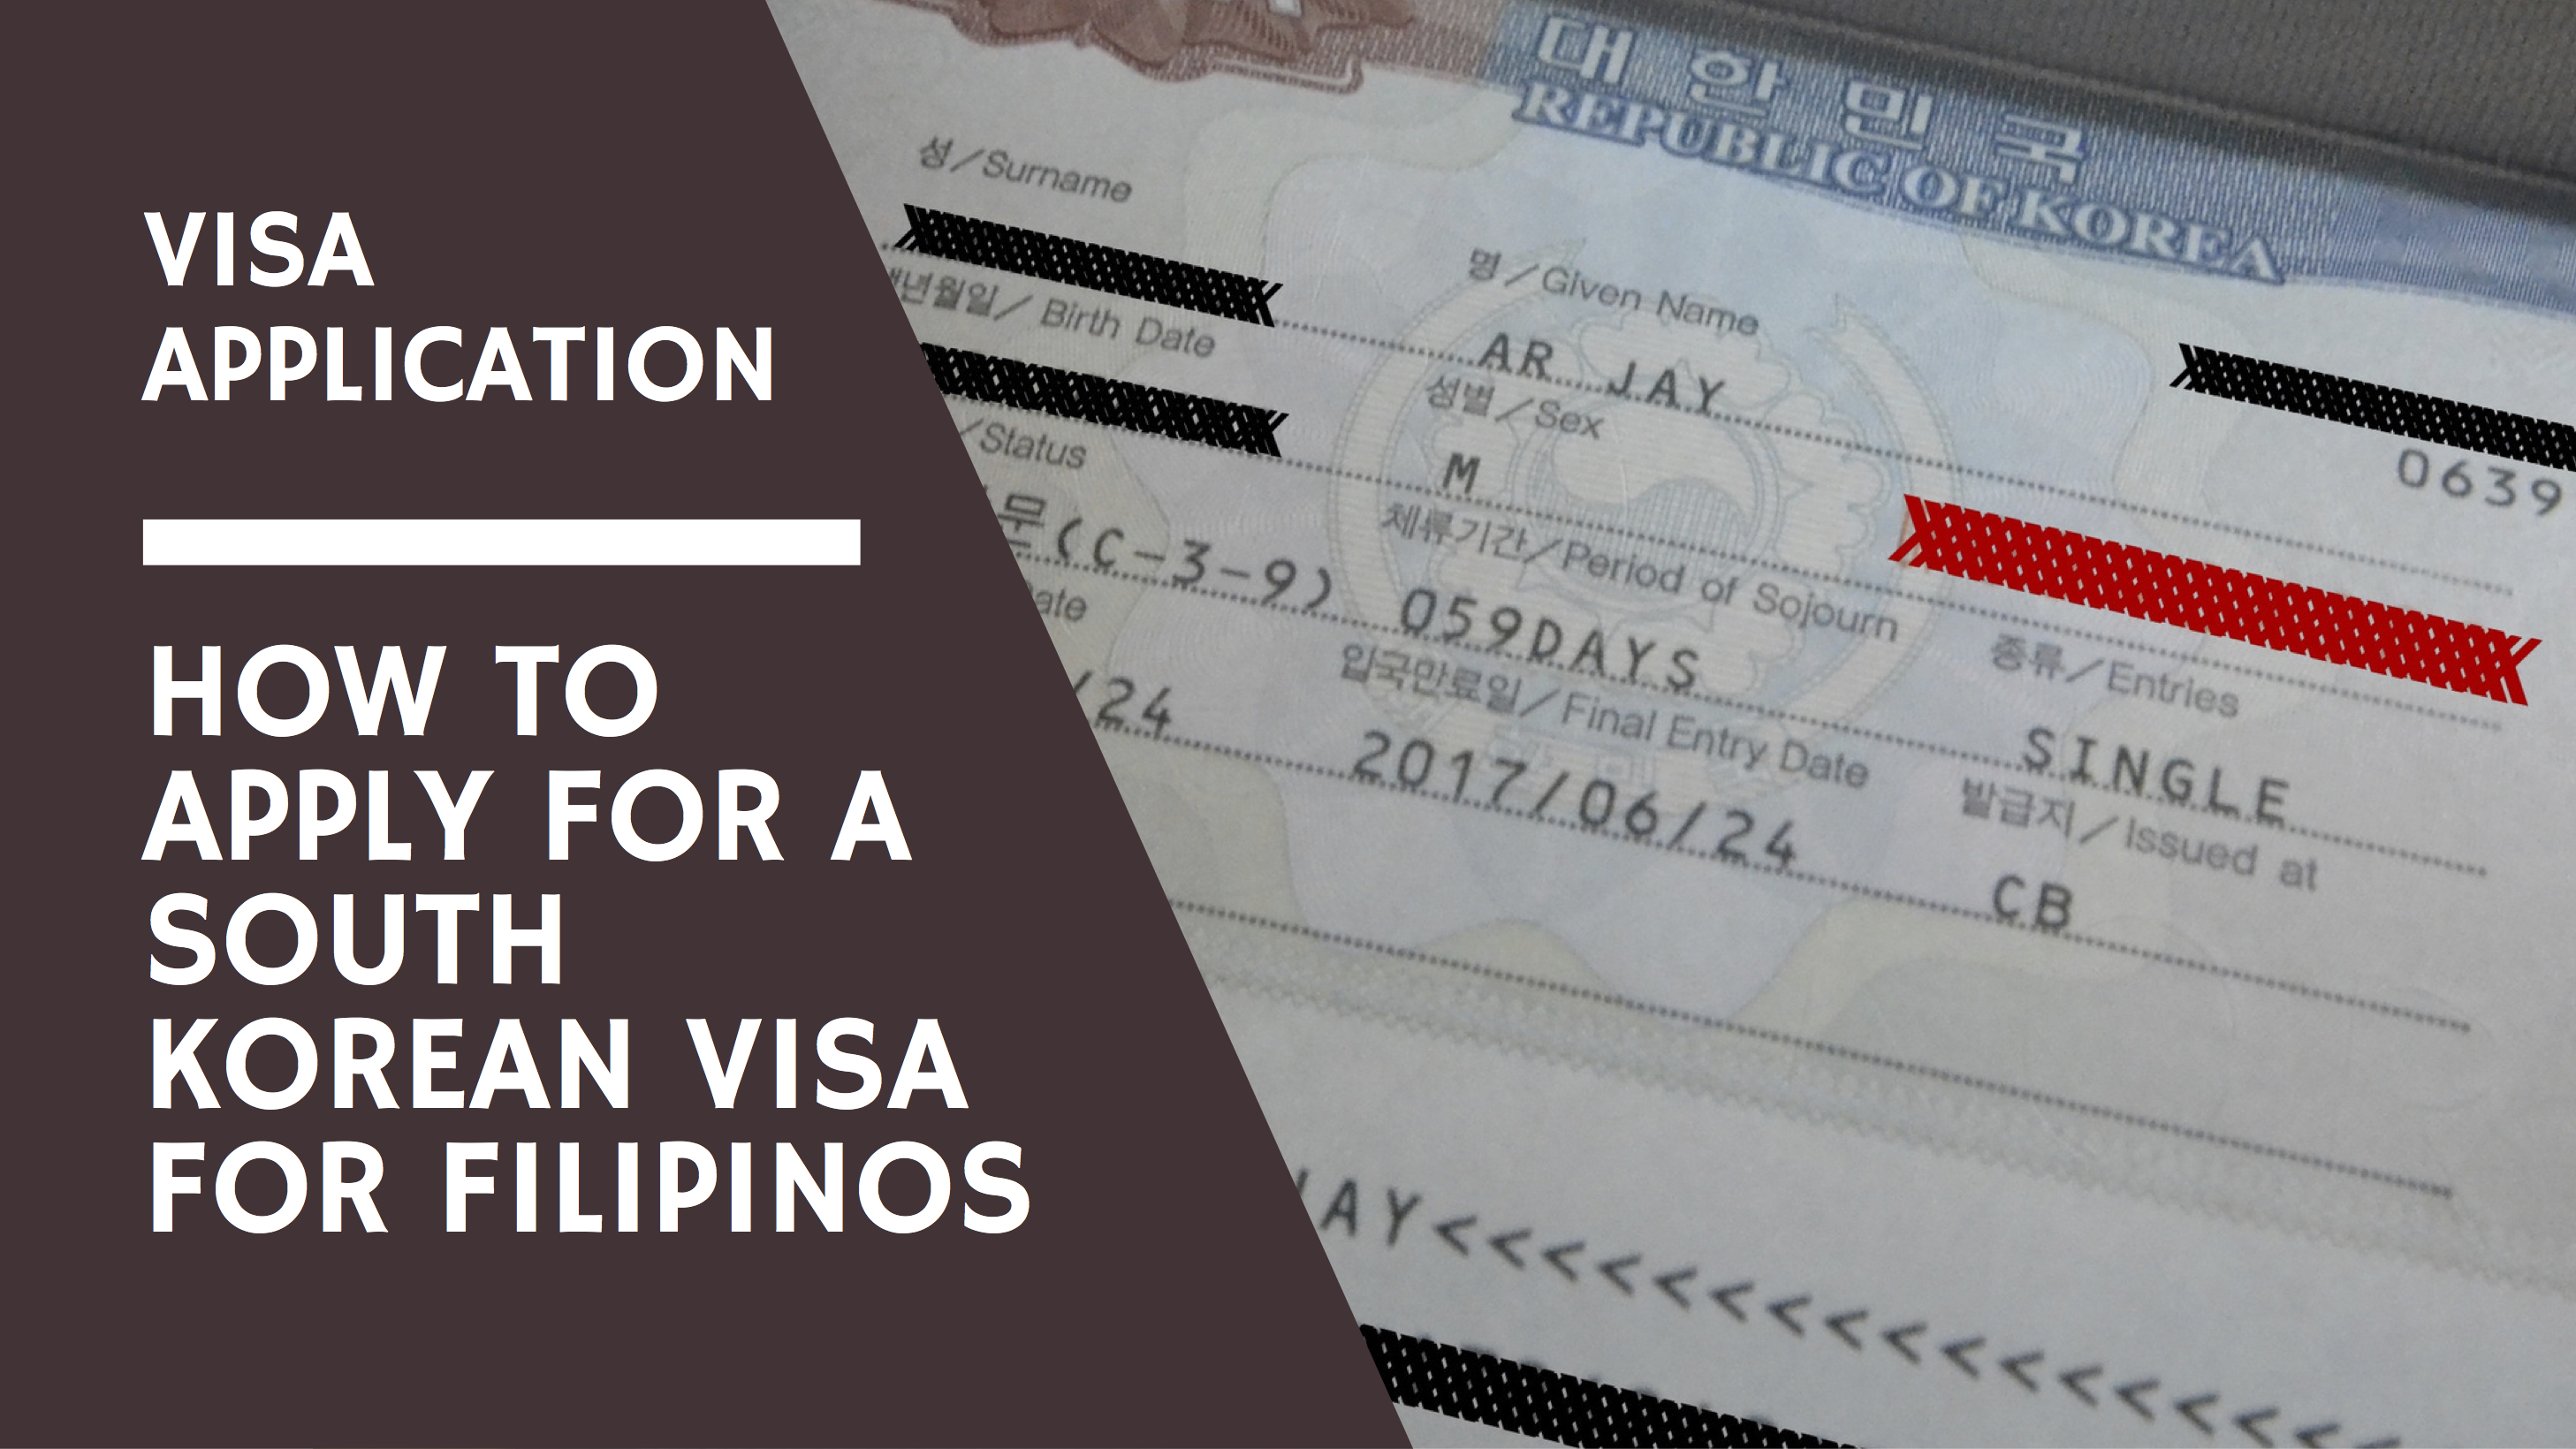 Visa Application How To Apply For A South Korean Visa For Filipino